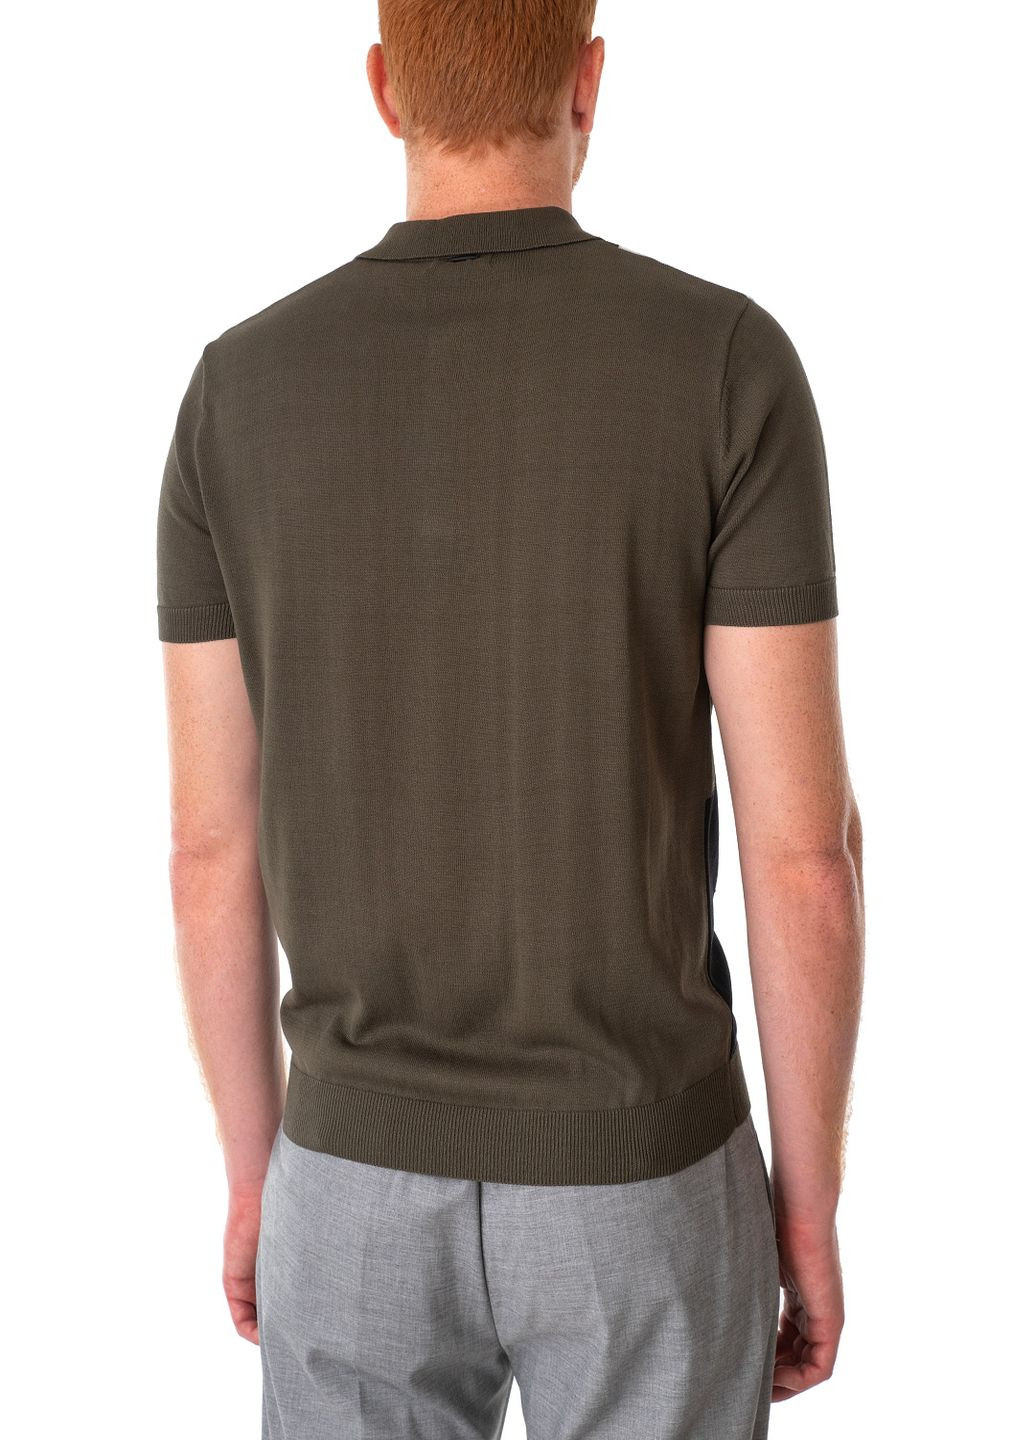 Оливковая (хаки) футболка-поло для мужчин Antony Morato